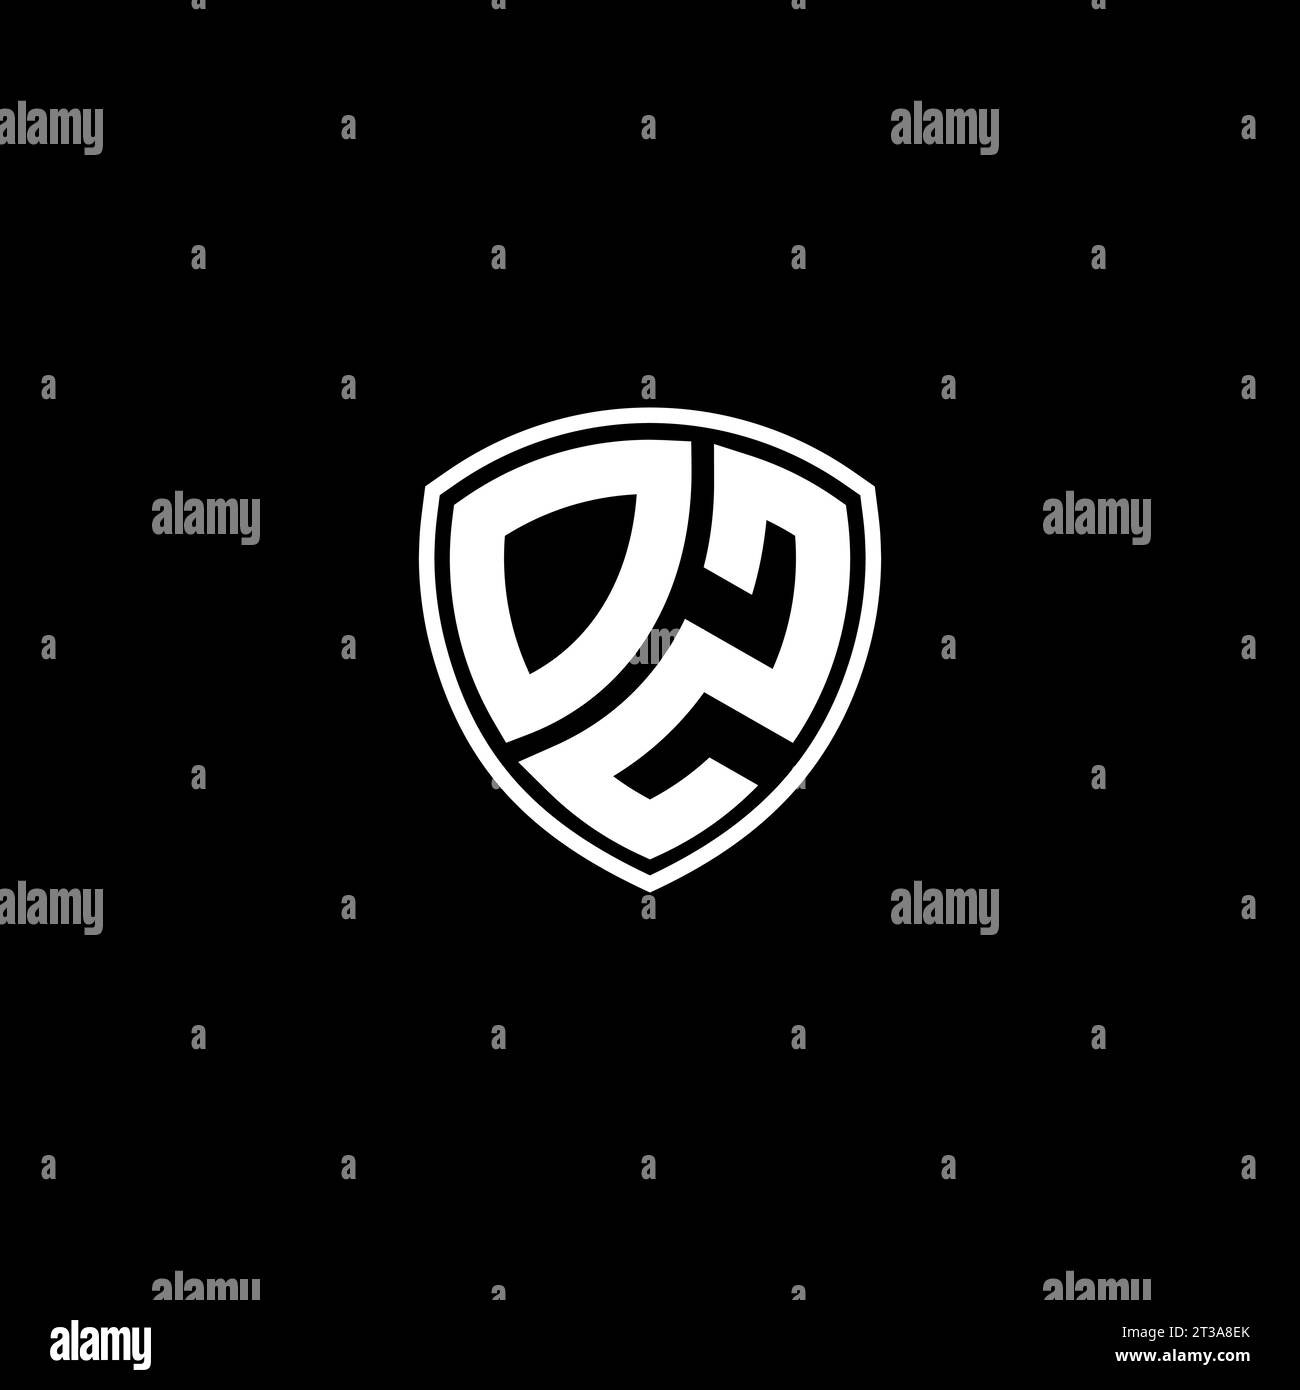 OZ logo monogram emblem style with shield shape design template ideas Stock Vector